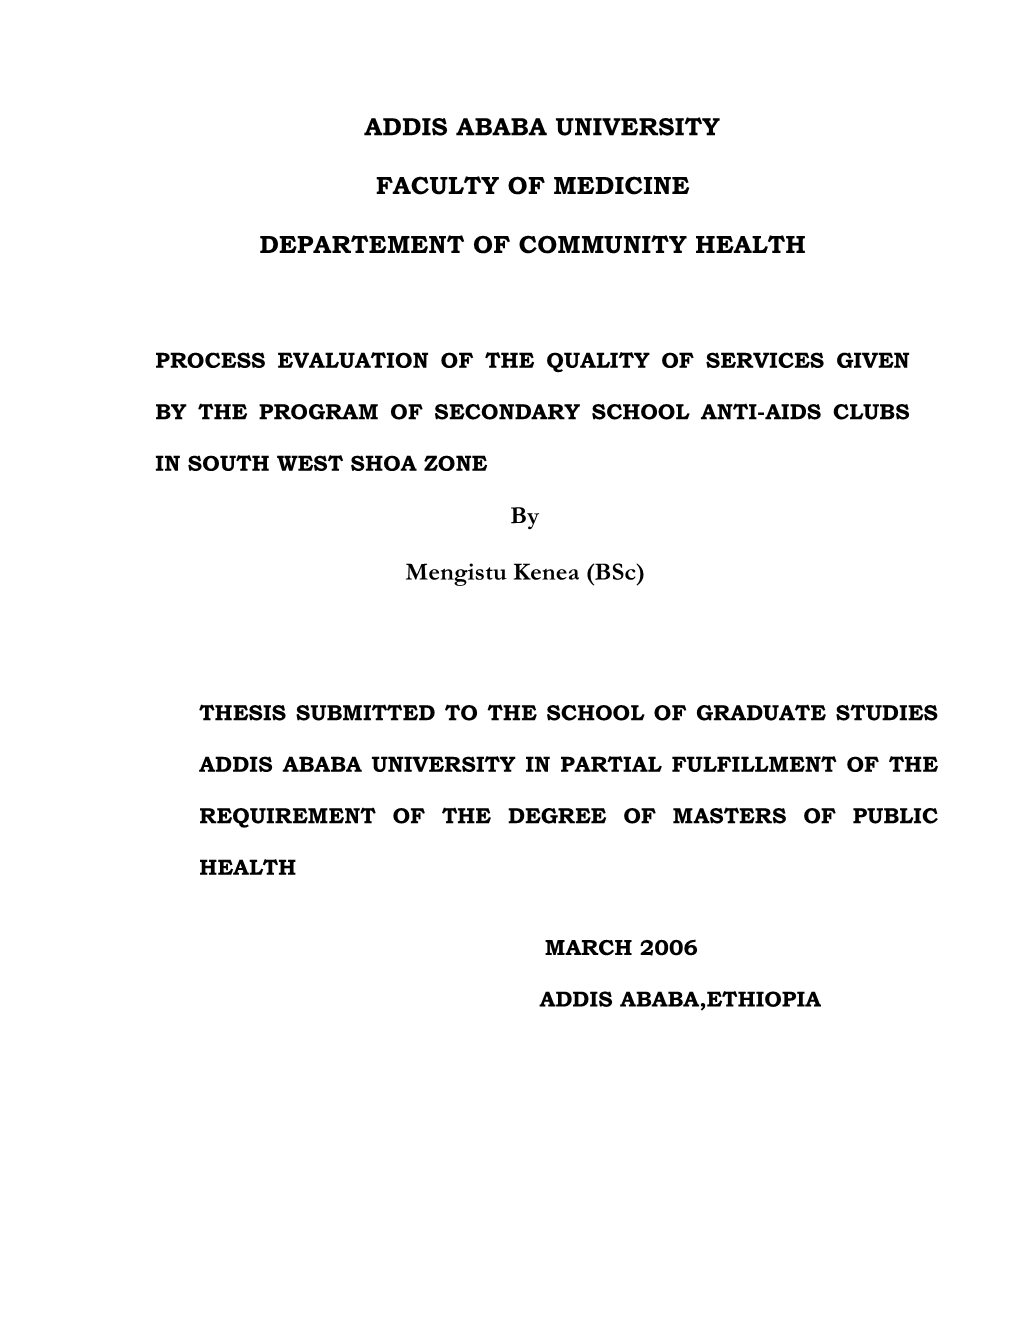 Addis Ababa University Faculty of Medicine